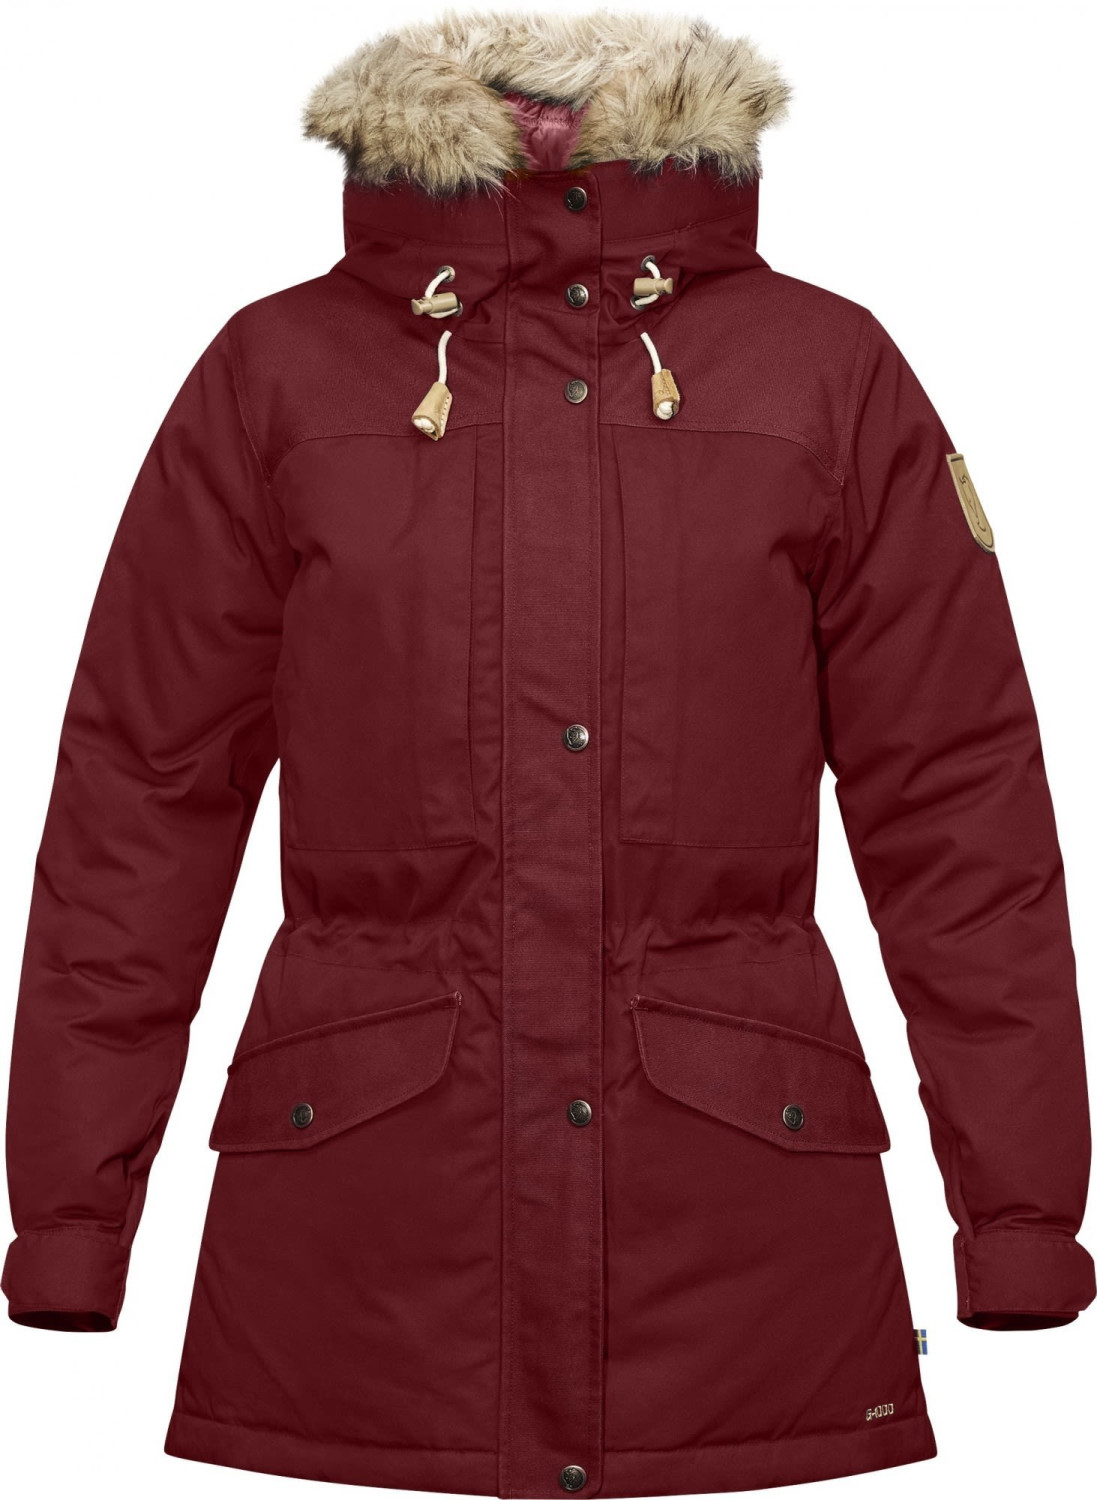 Buy FjÃ¤llrÃ¤ven Singi Down Jacket W red oak from Â£352.17 (Today) â Best Deals on idealo.co.uk